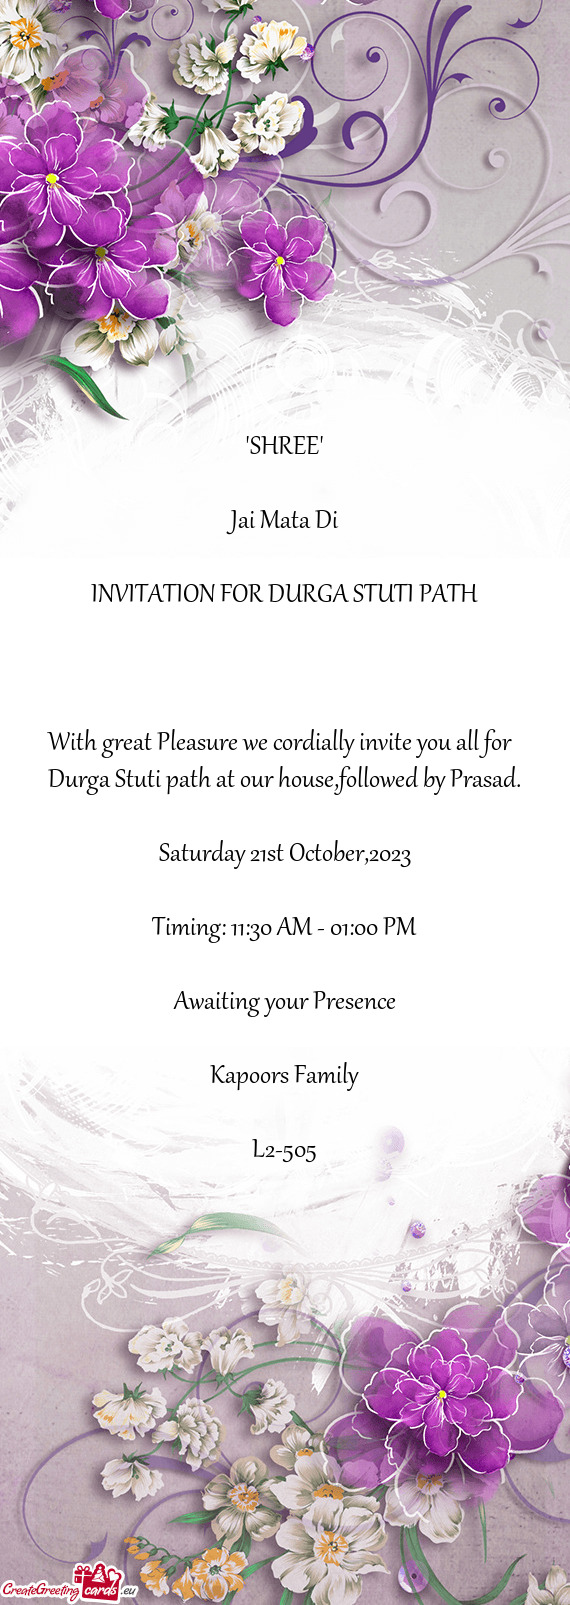 INVITATION FOR DURGA STUTI PATH